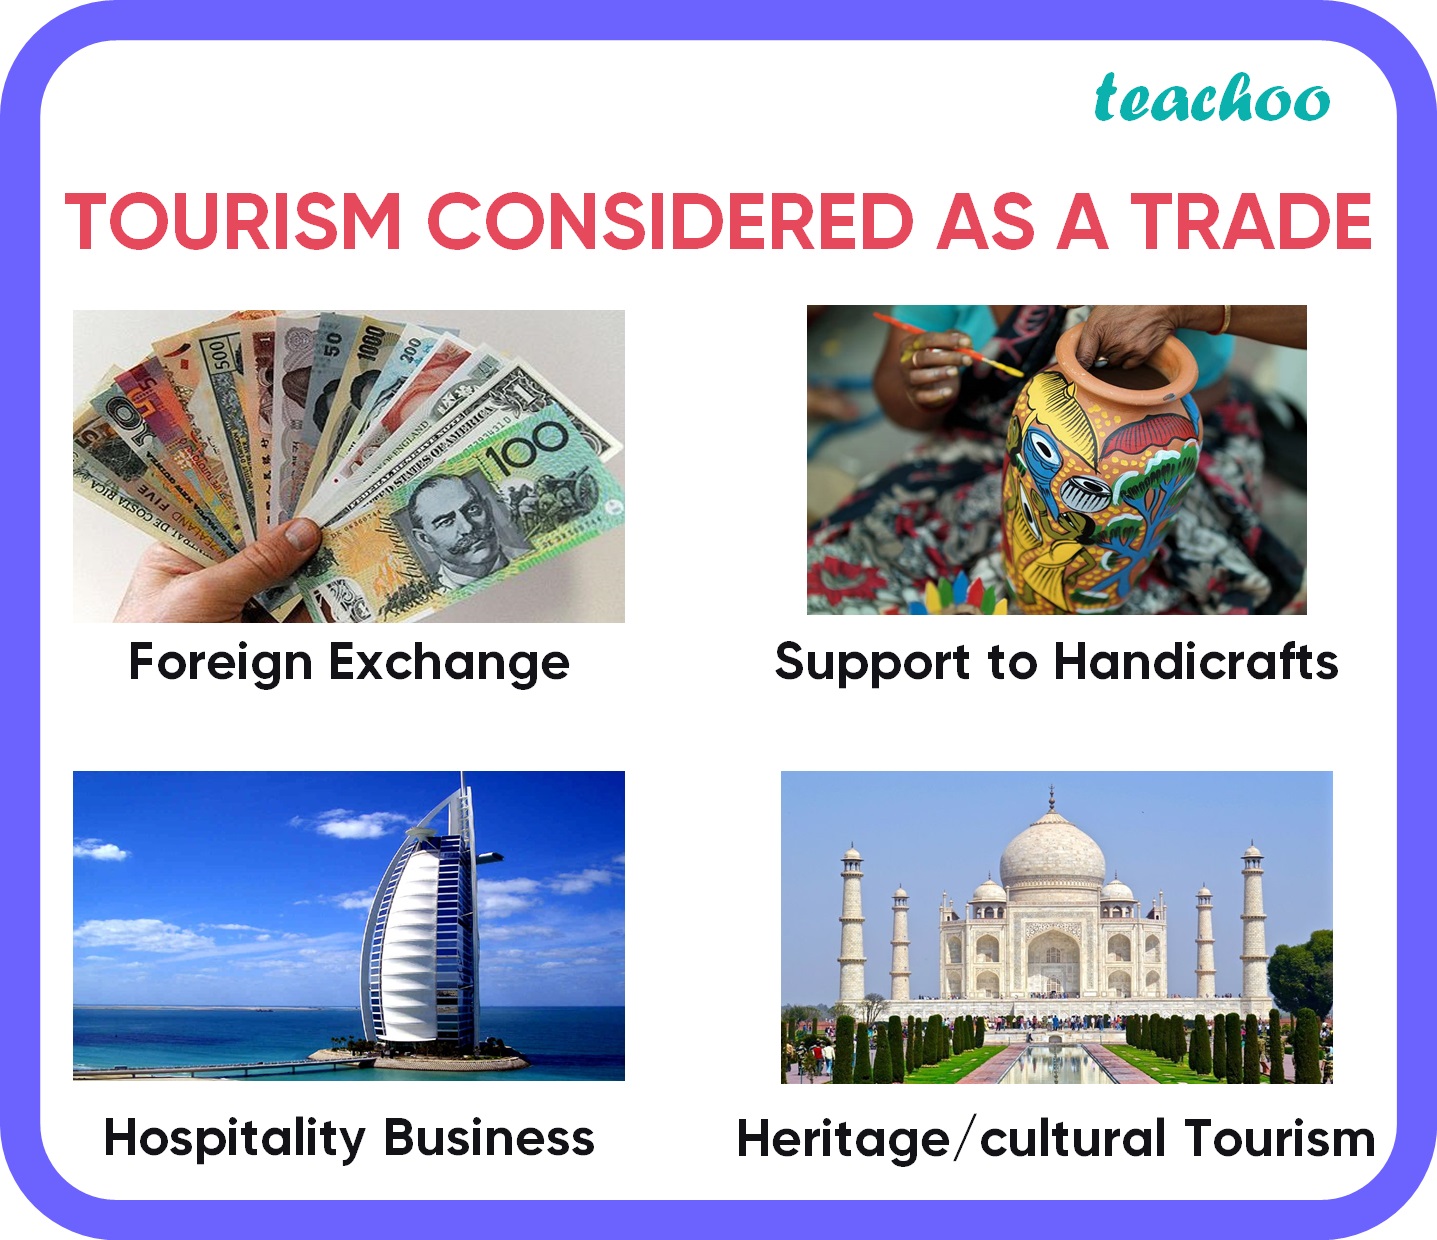 the tourist trade